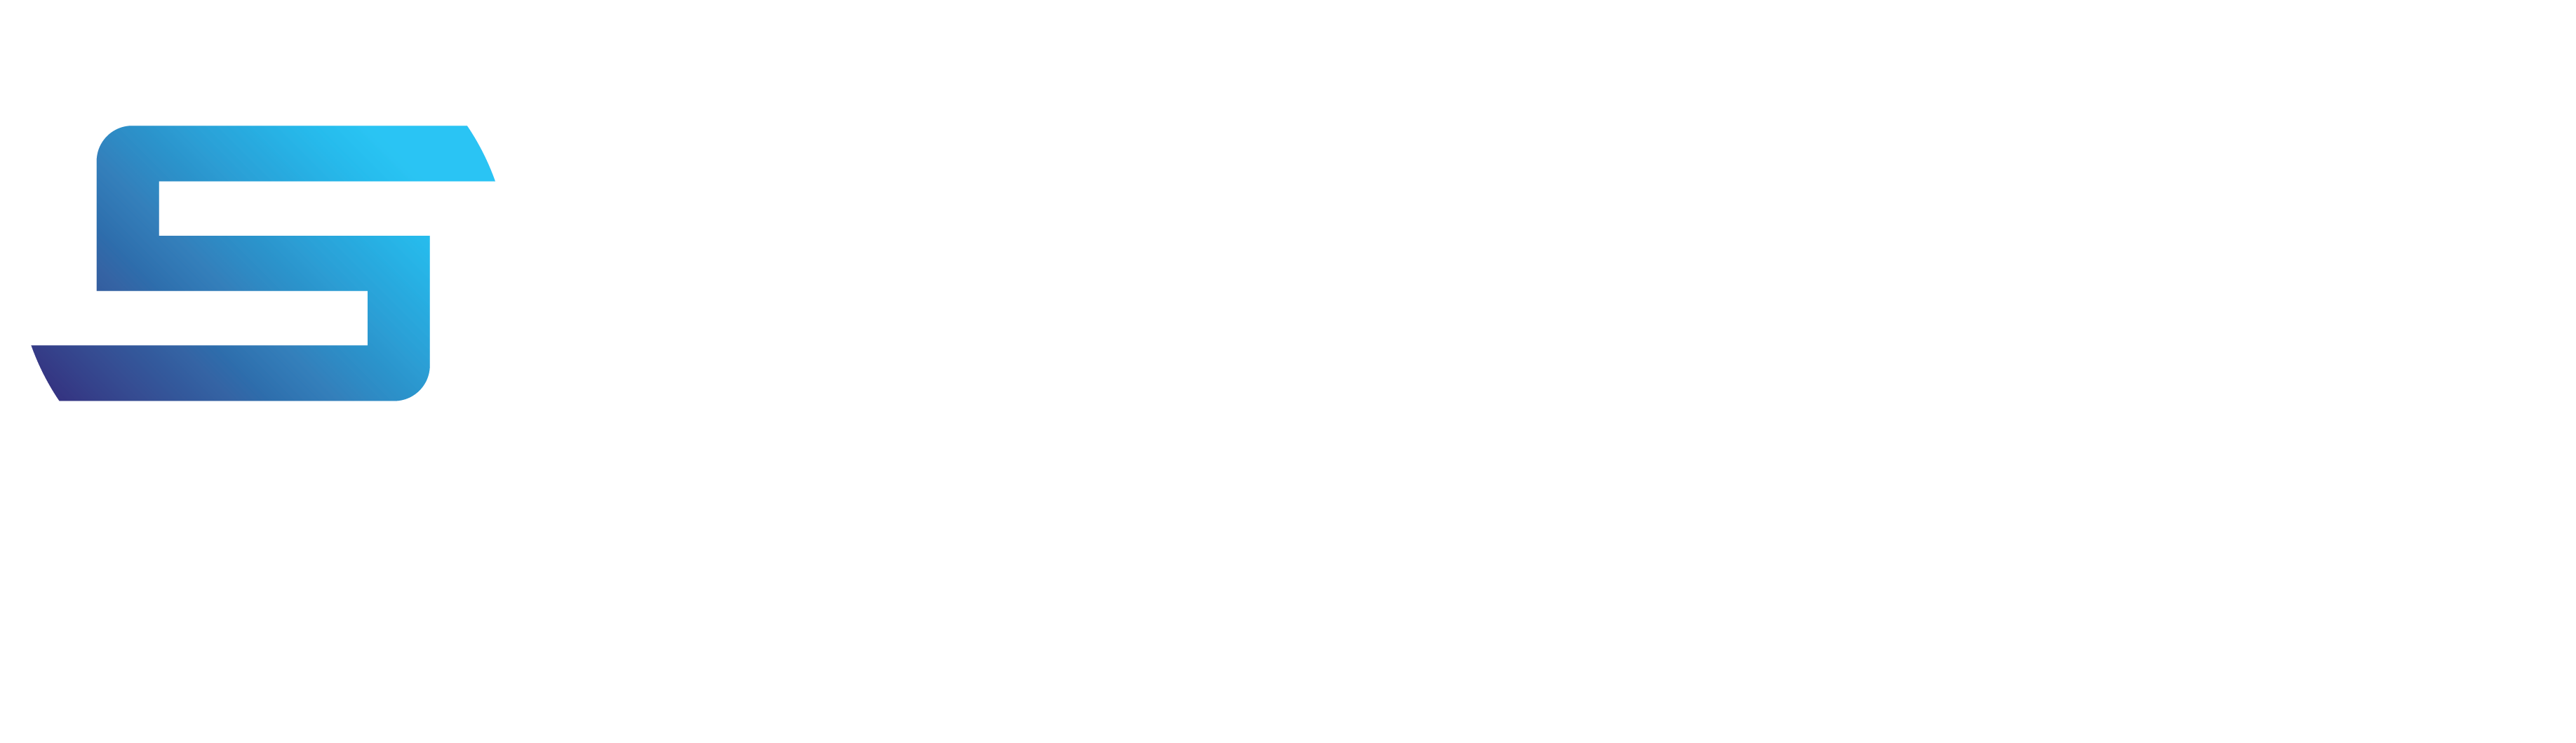 www.RheoSense.com